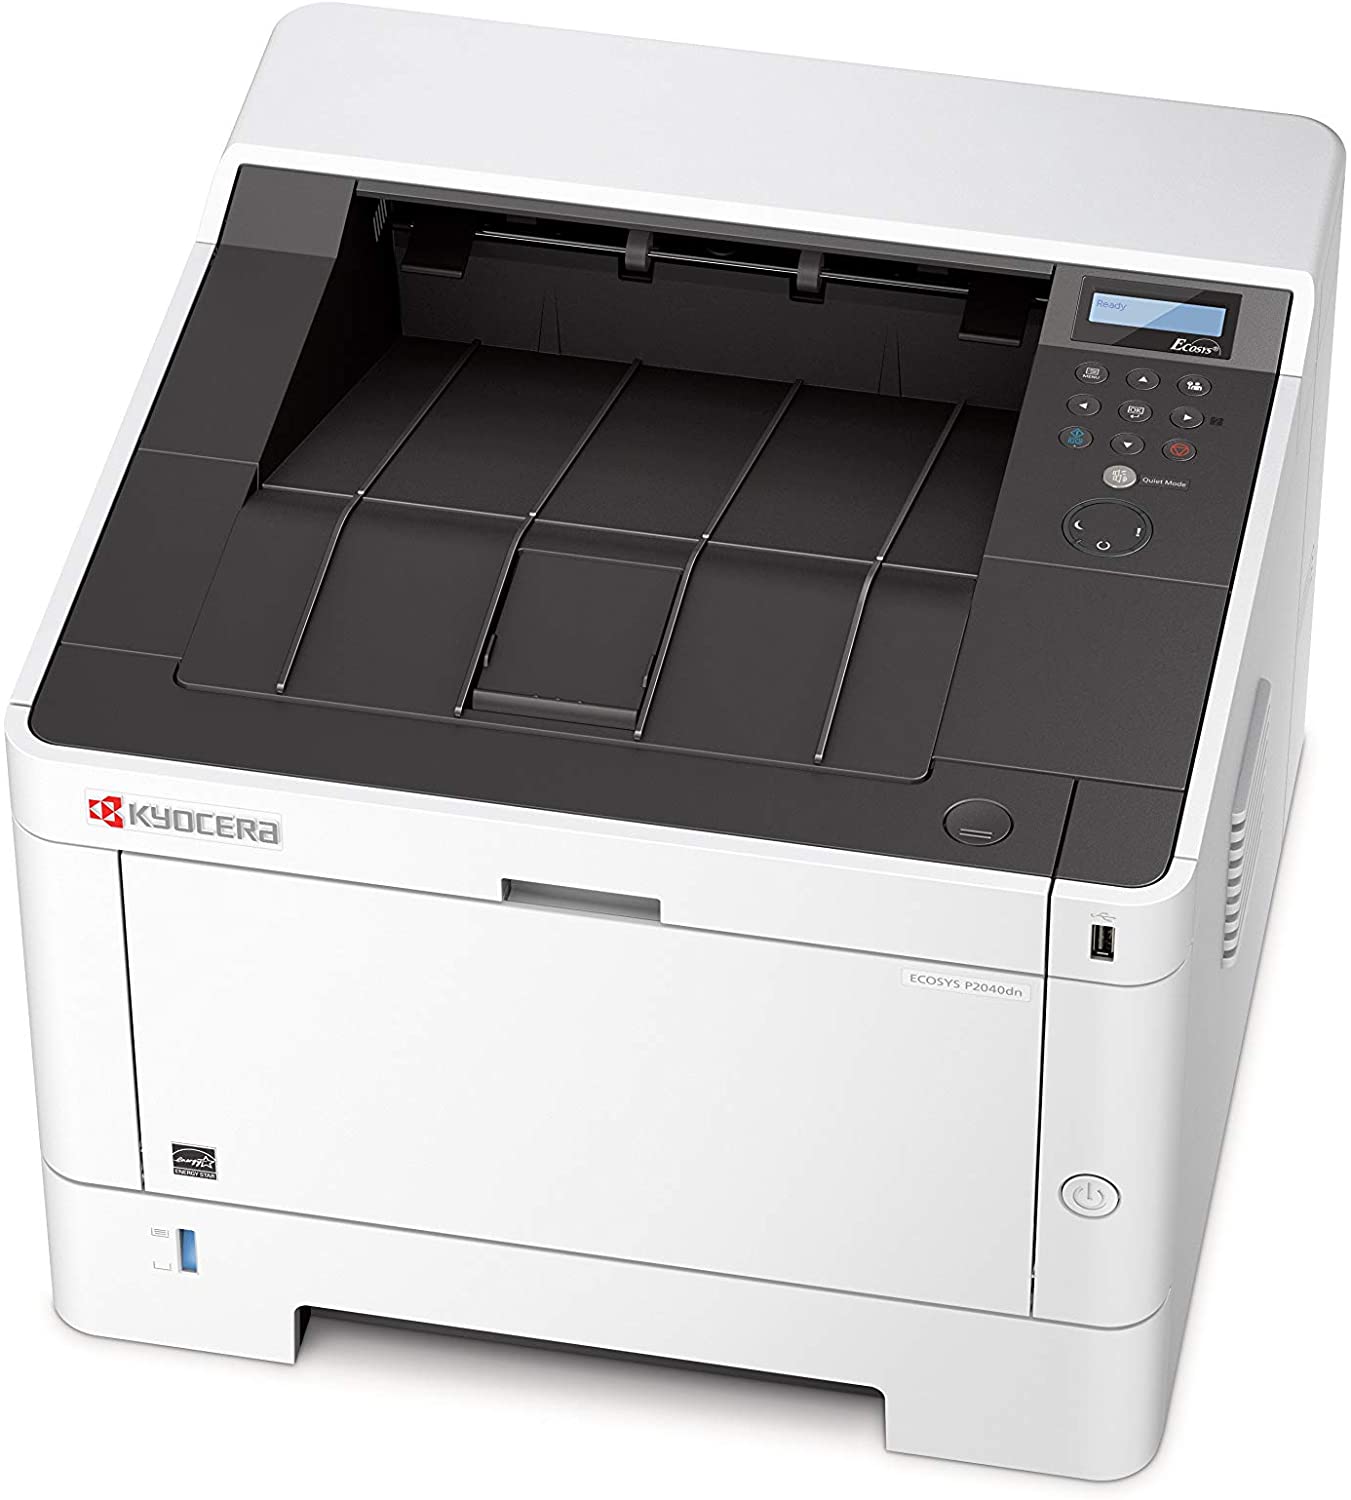 Kyocera Ecosys P2040dn Laserdrucker | WLAN Drucker Test 2021